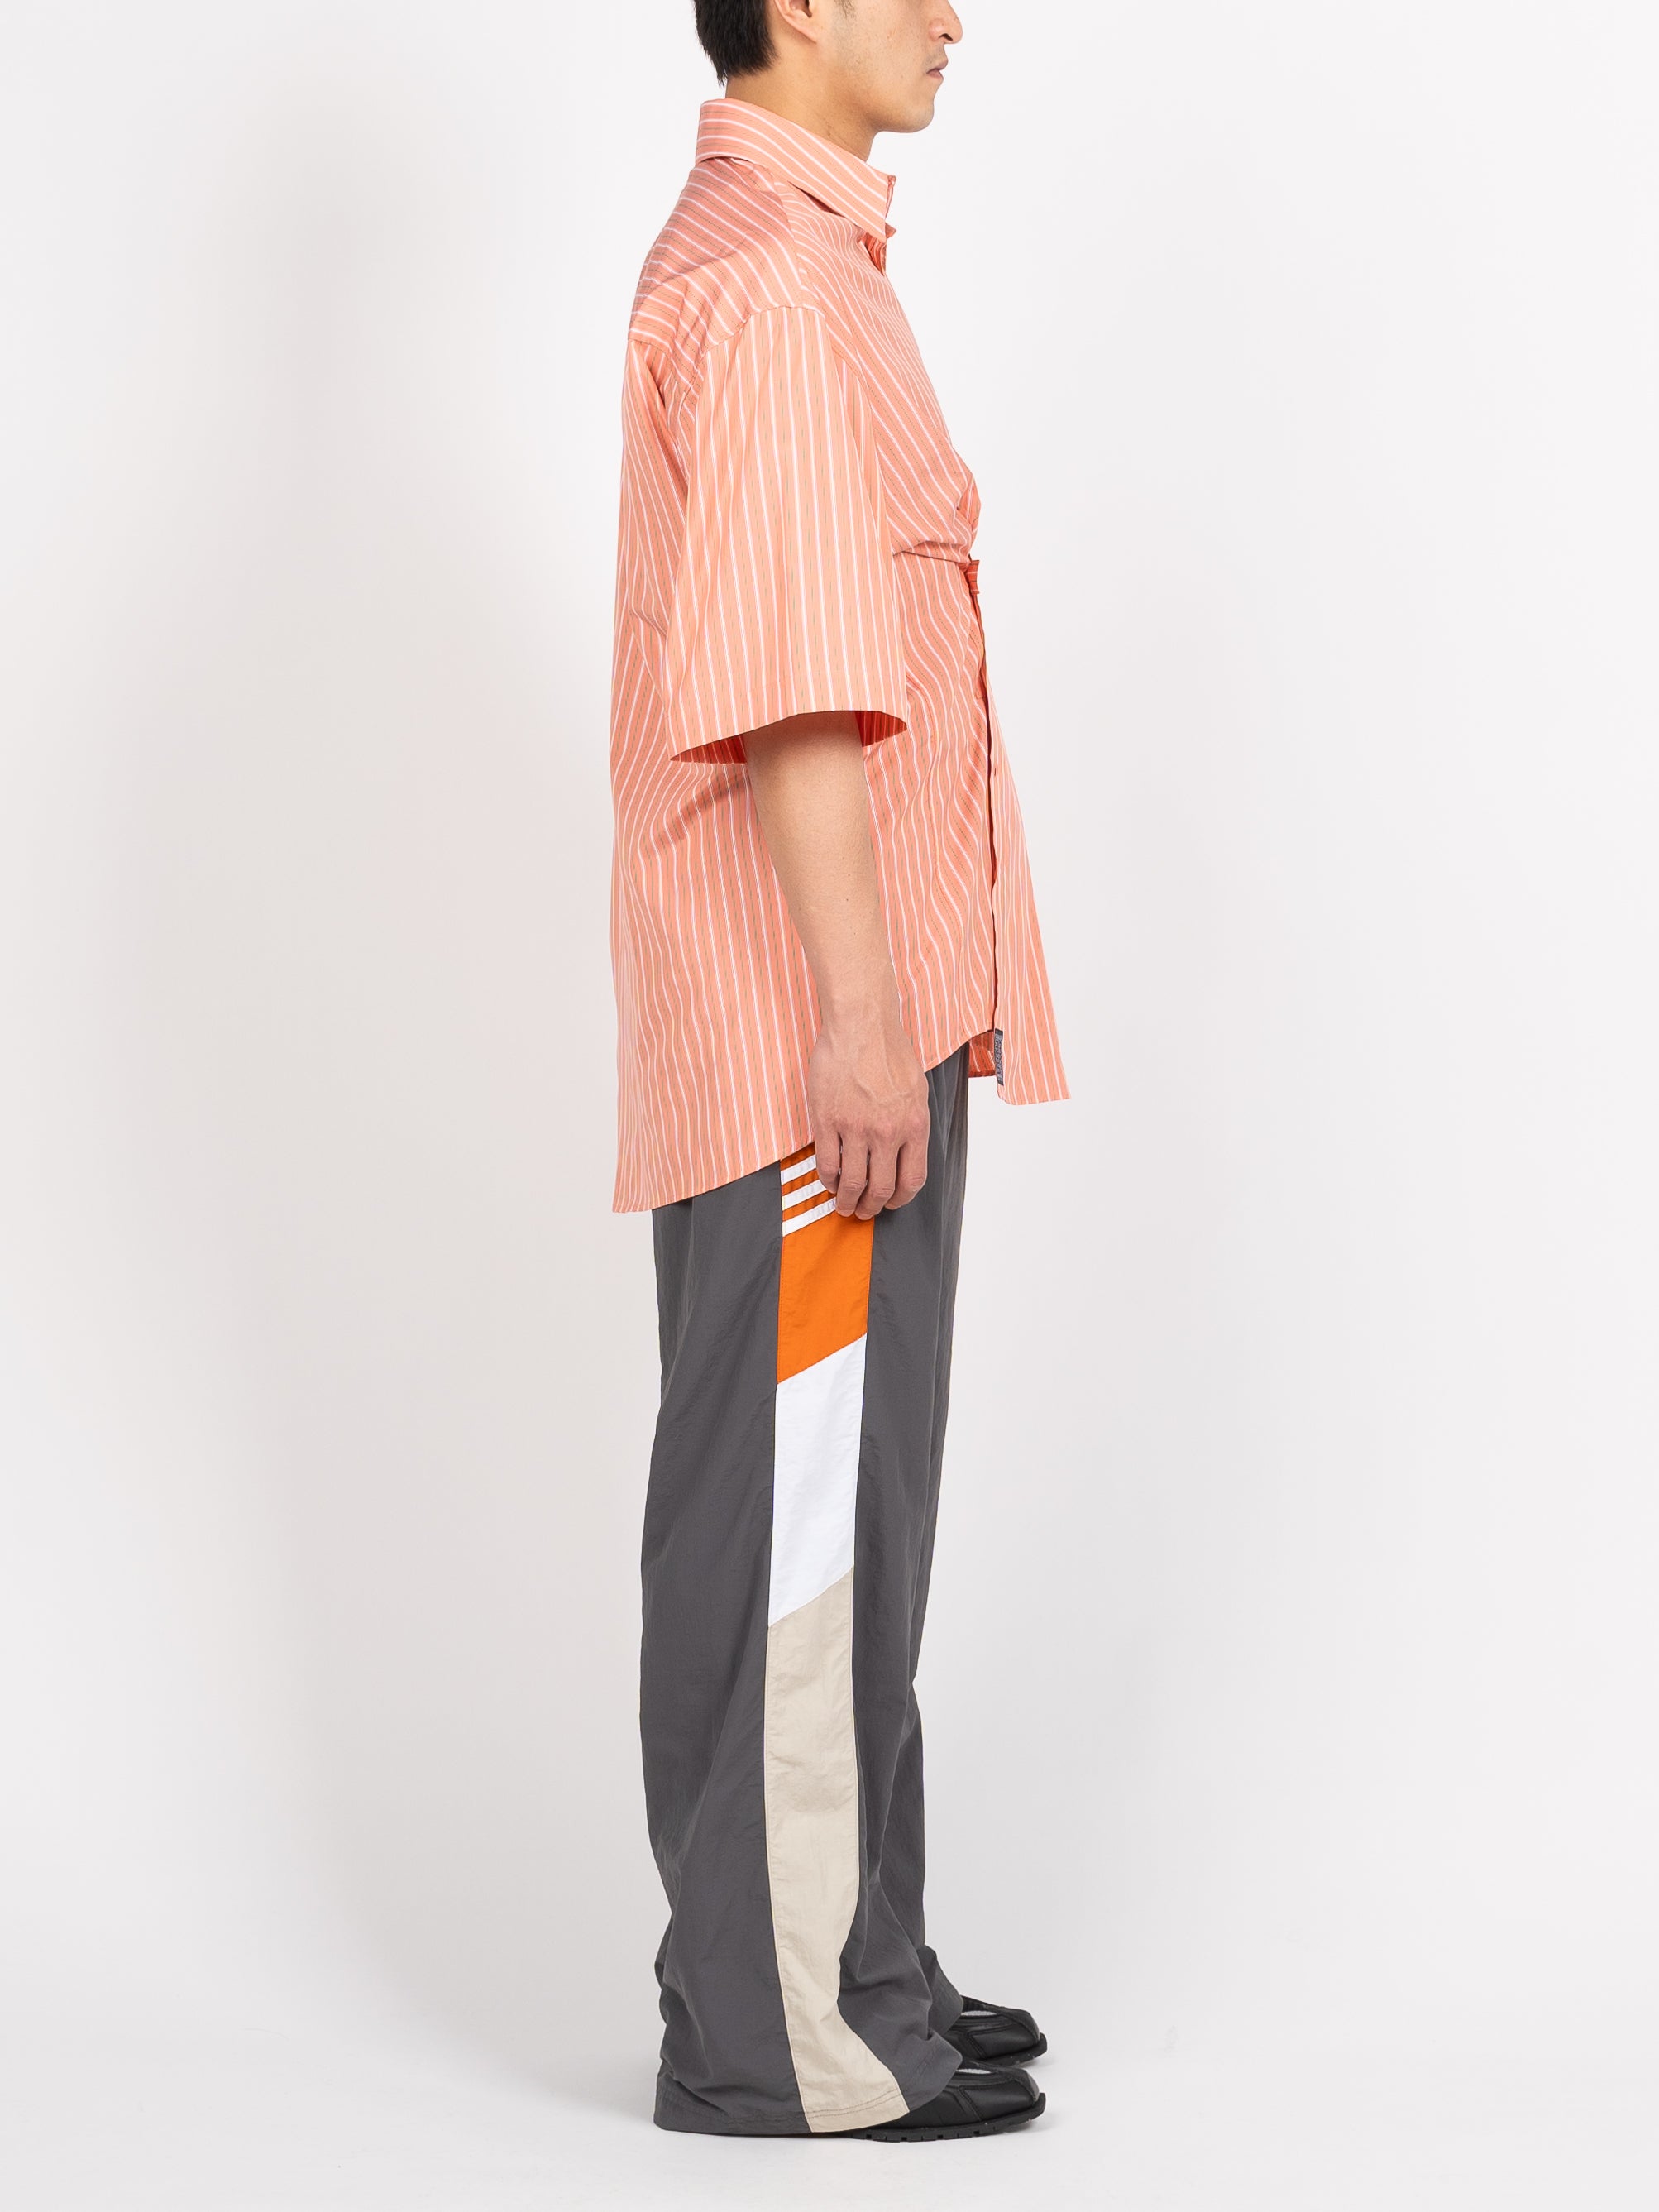 Martine Rose S/S Wrap Shirt (Pink/Green Stripe)